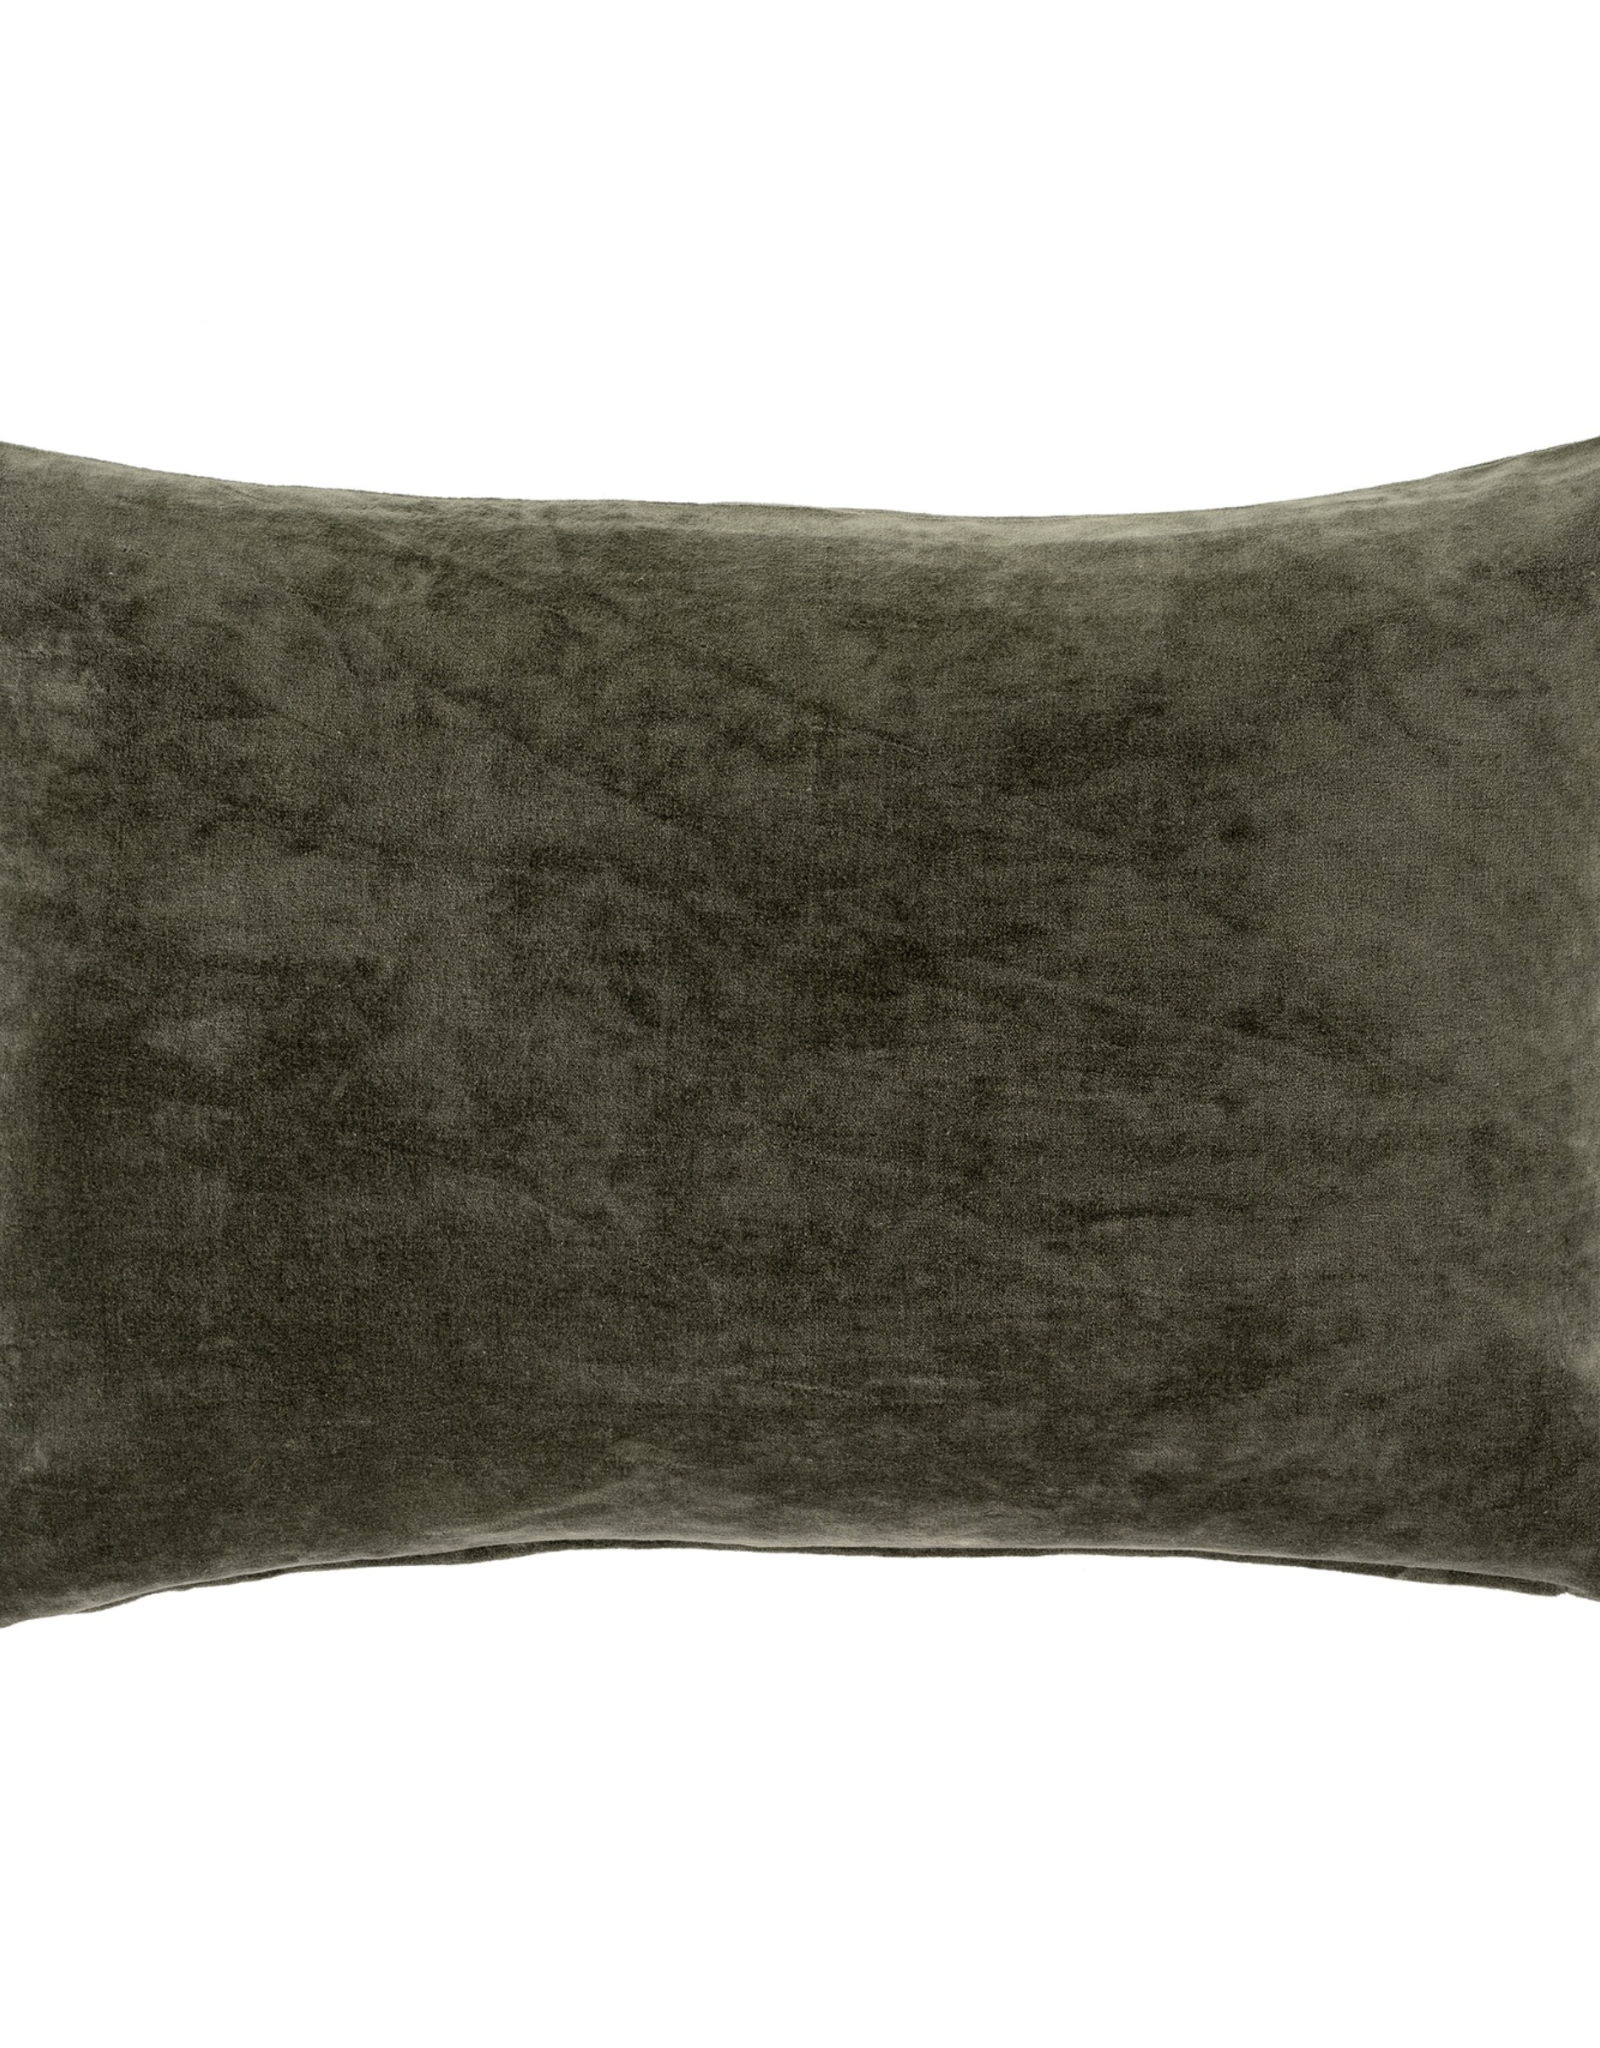 Vera Velvet Pillow, Cypress 16x24